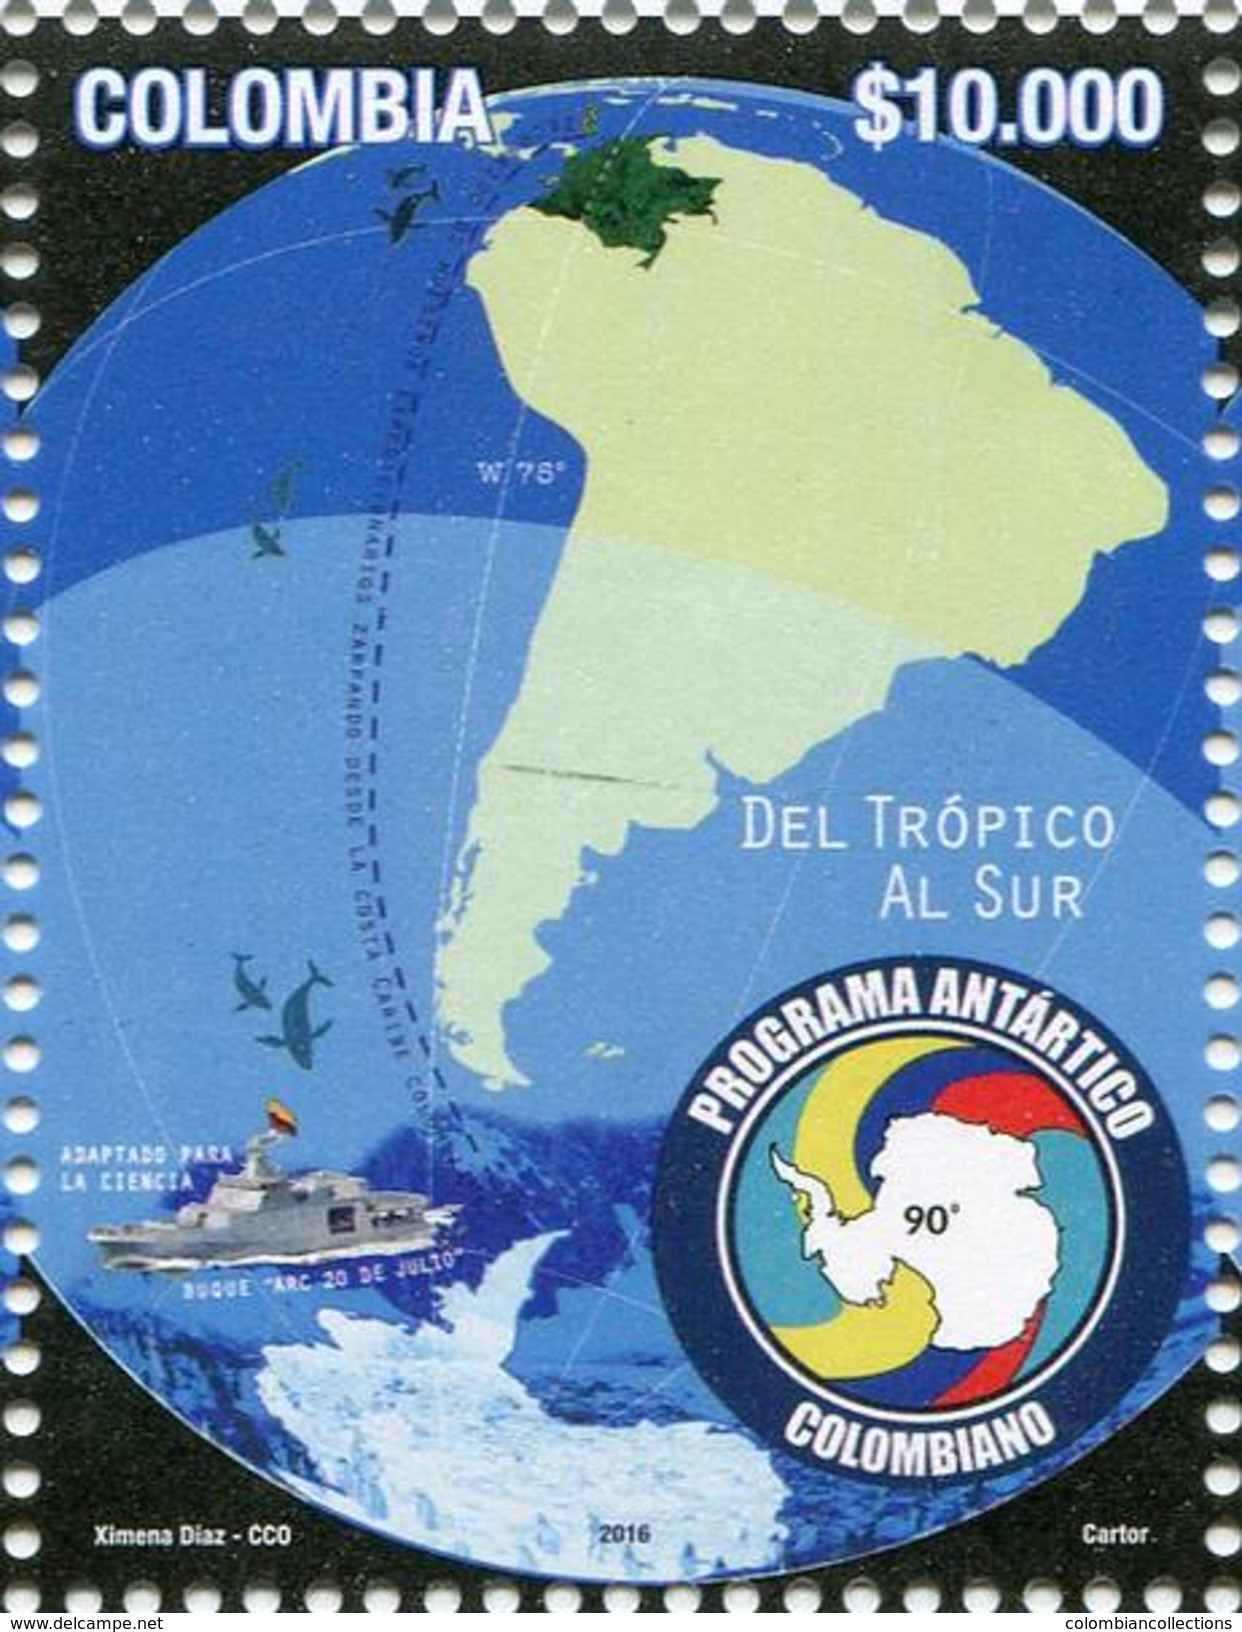 Lote 2016-14, Colombia, 2016, Sello, Stamp, Programa Antartico Colombiano, Antarctica, Boat, Penguin - Colombie